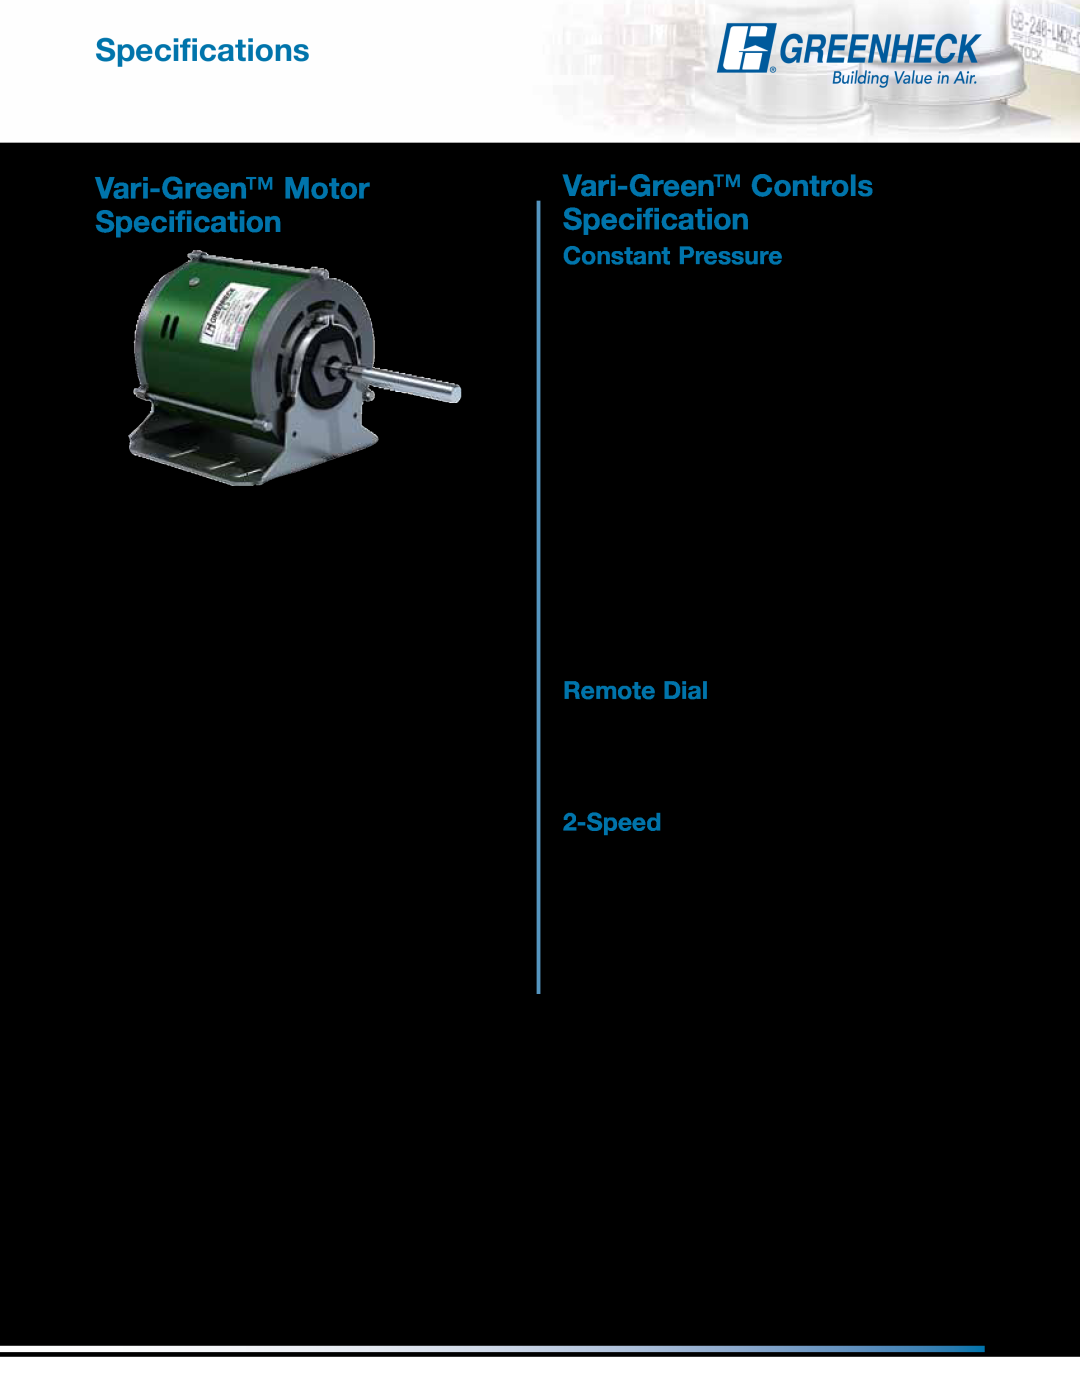 Greenheck Fan GB Specifications, Vari-Green Motor Specification, Vari-Green Controls Specification, Constant Pressure 